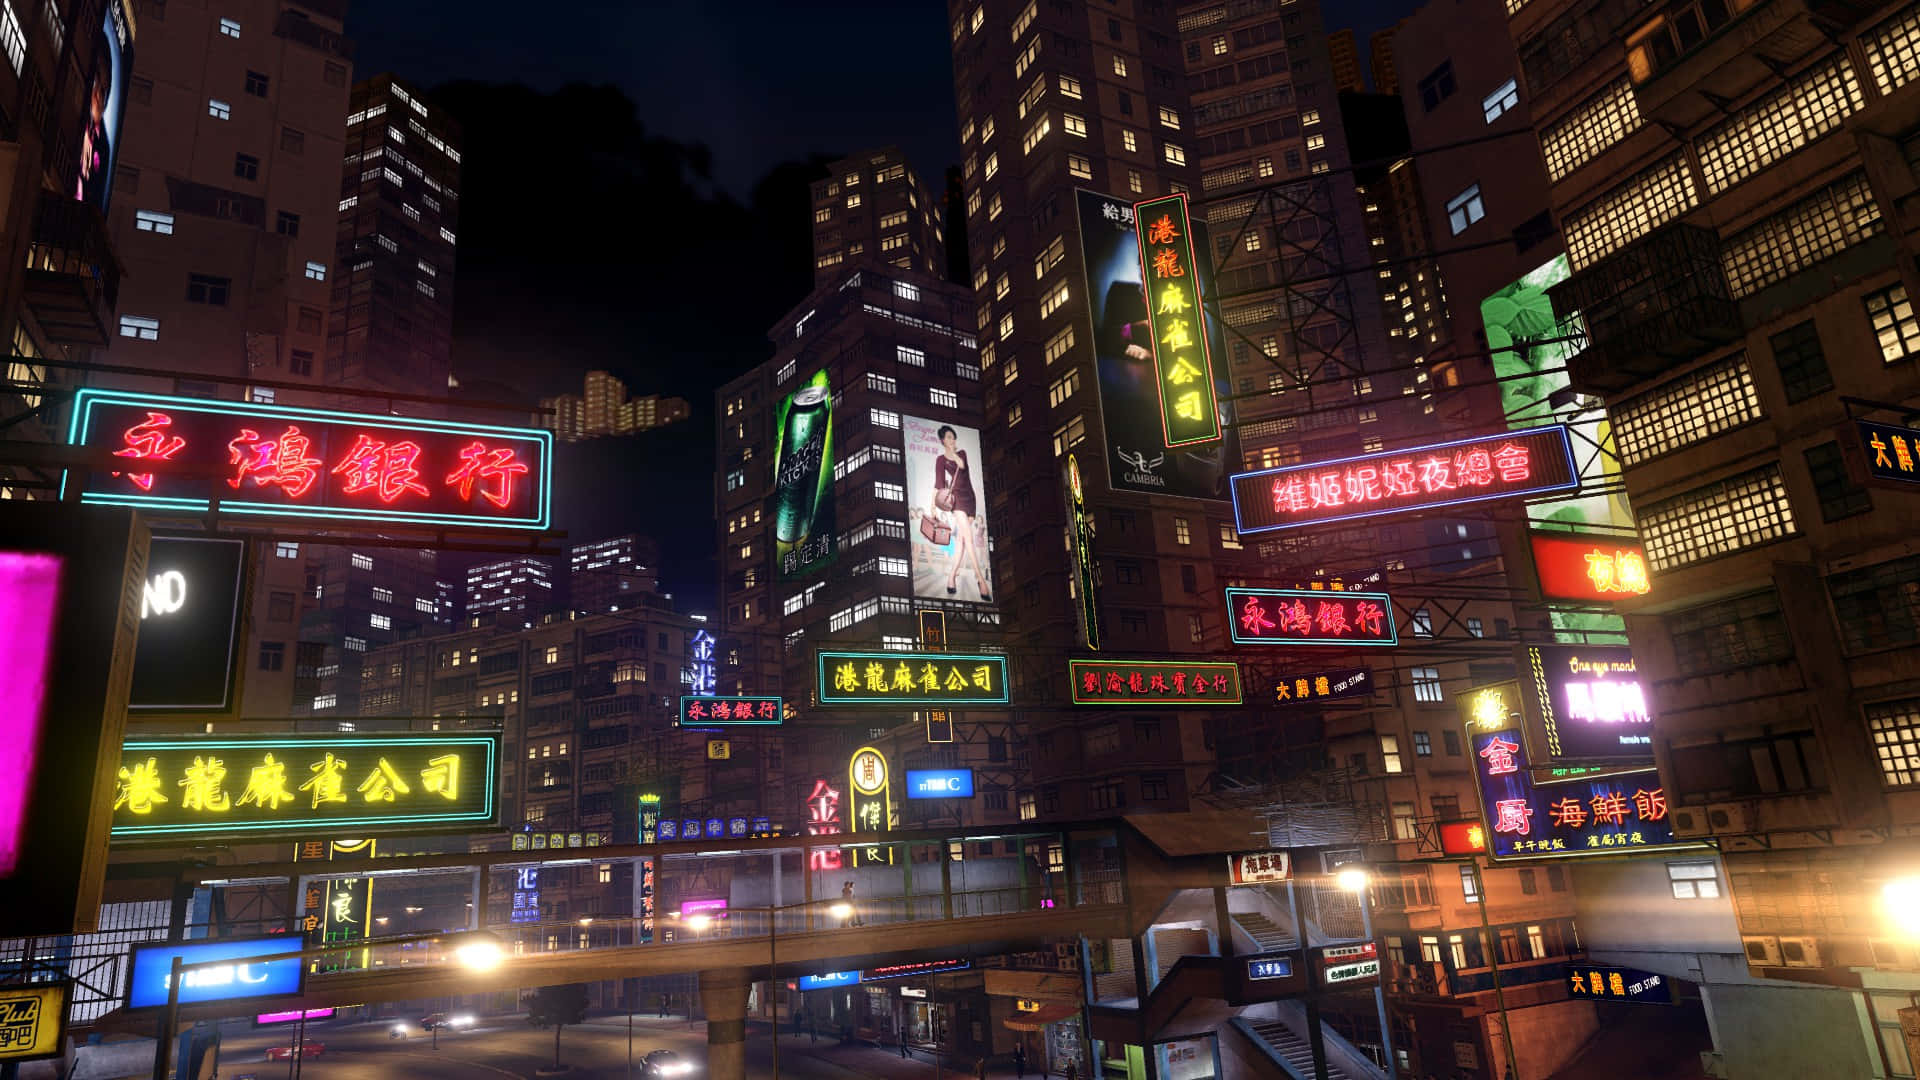 Mejorfondo De Pantalla De Sleeping Dogs: Ciudad De Hong Kong.